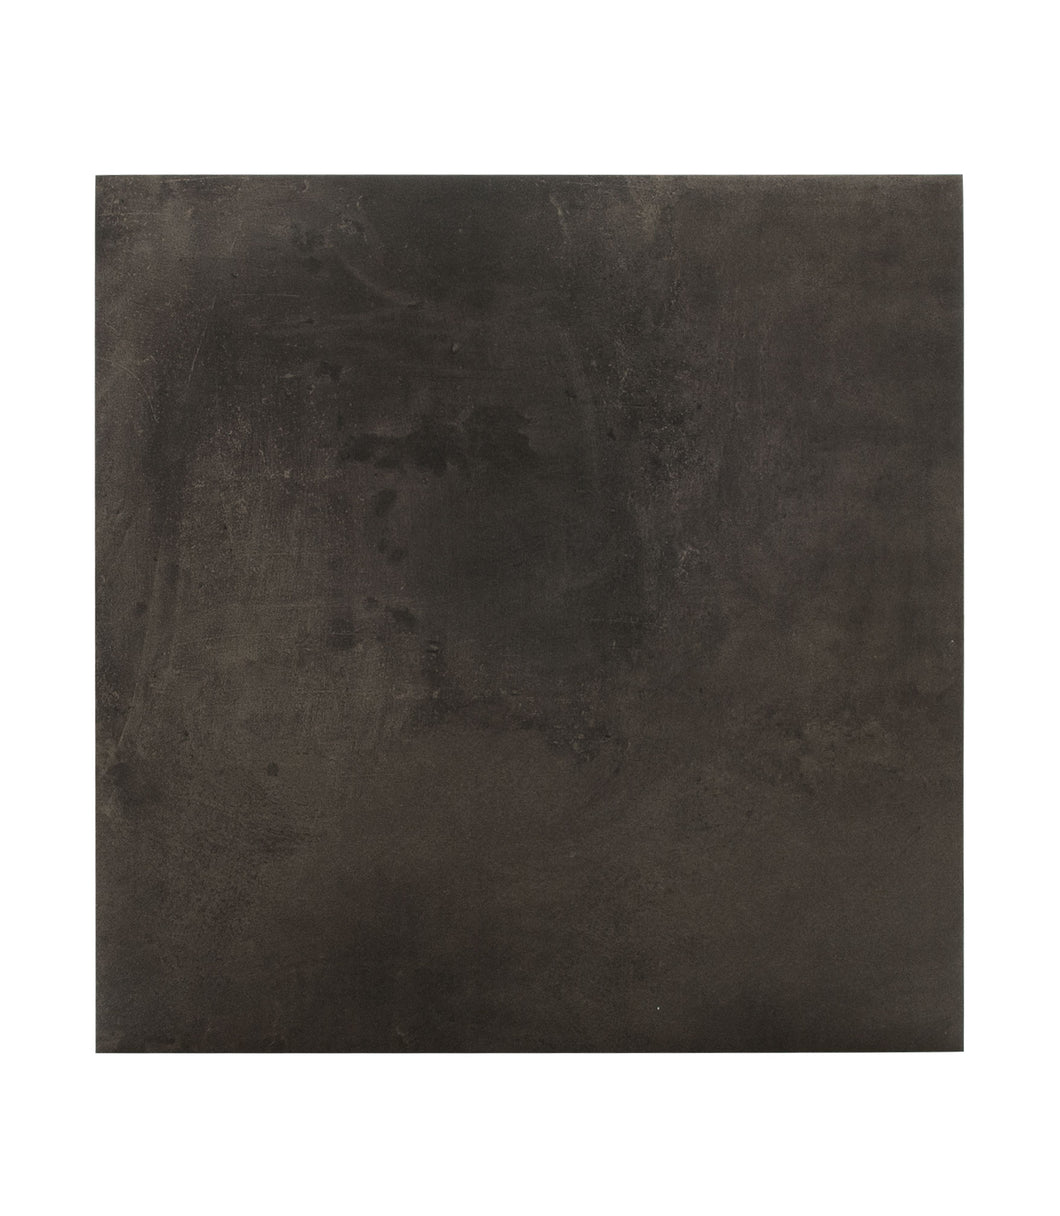 Md Dark Grey Stone Tile